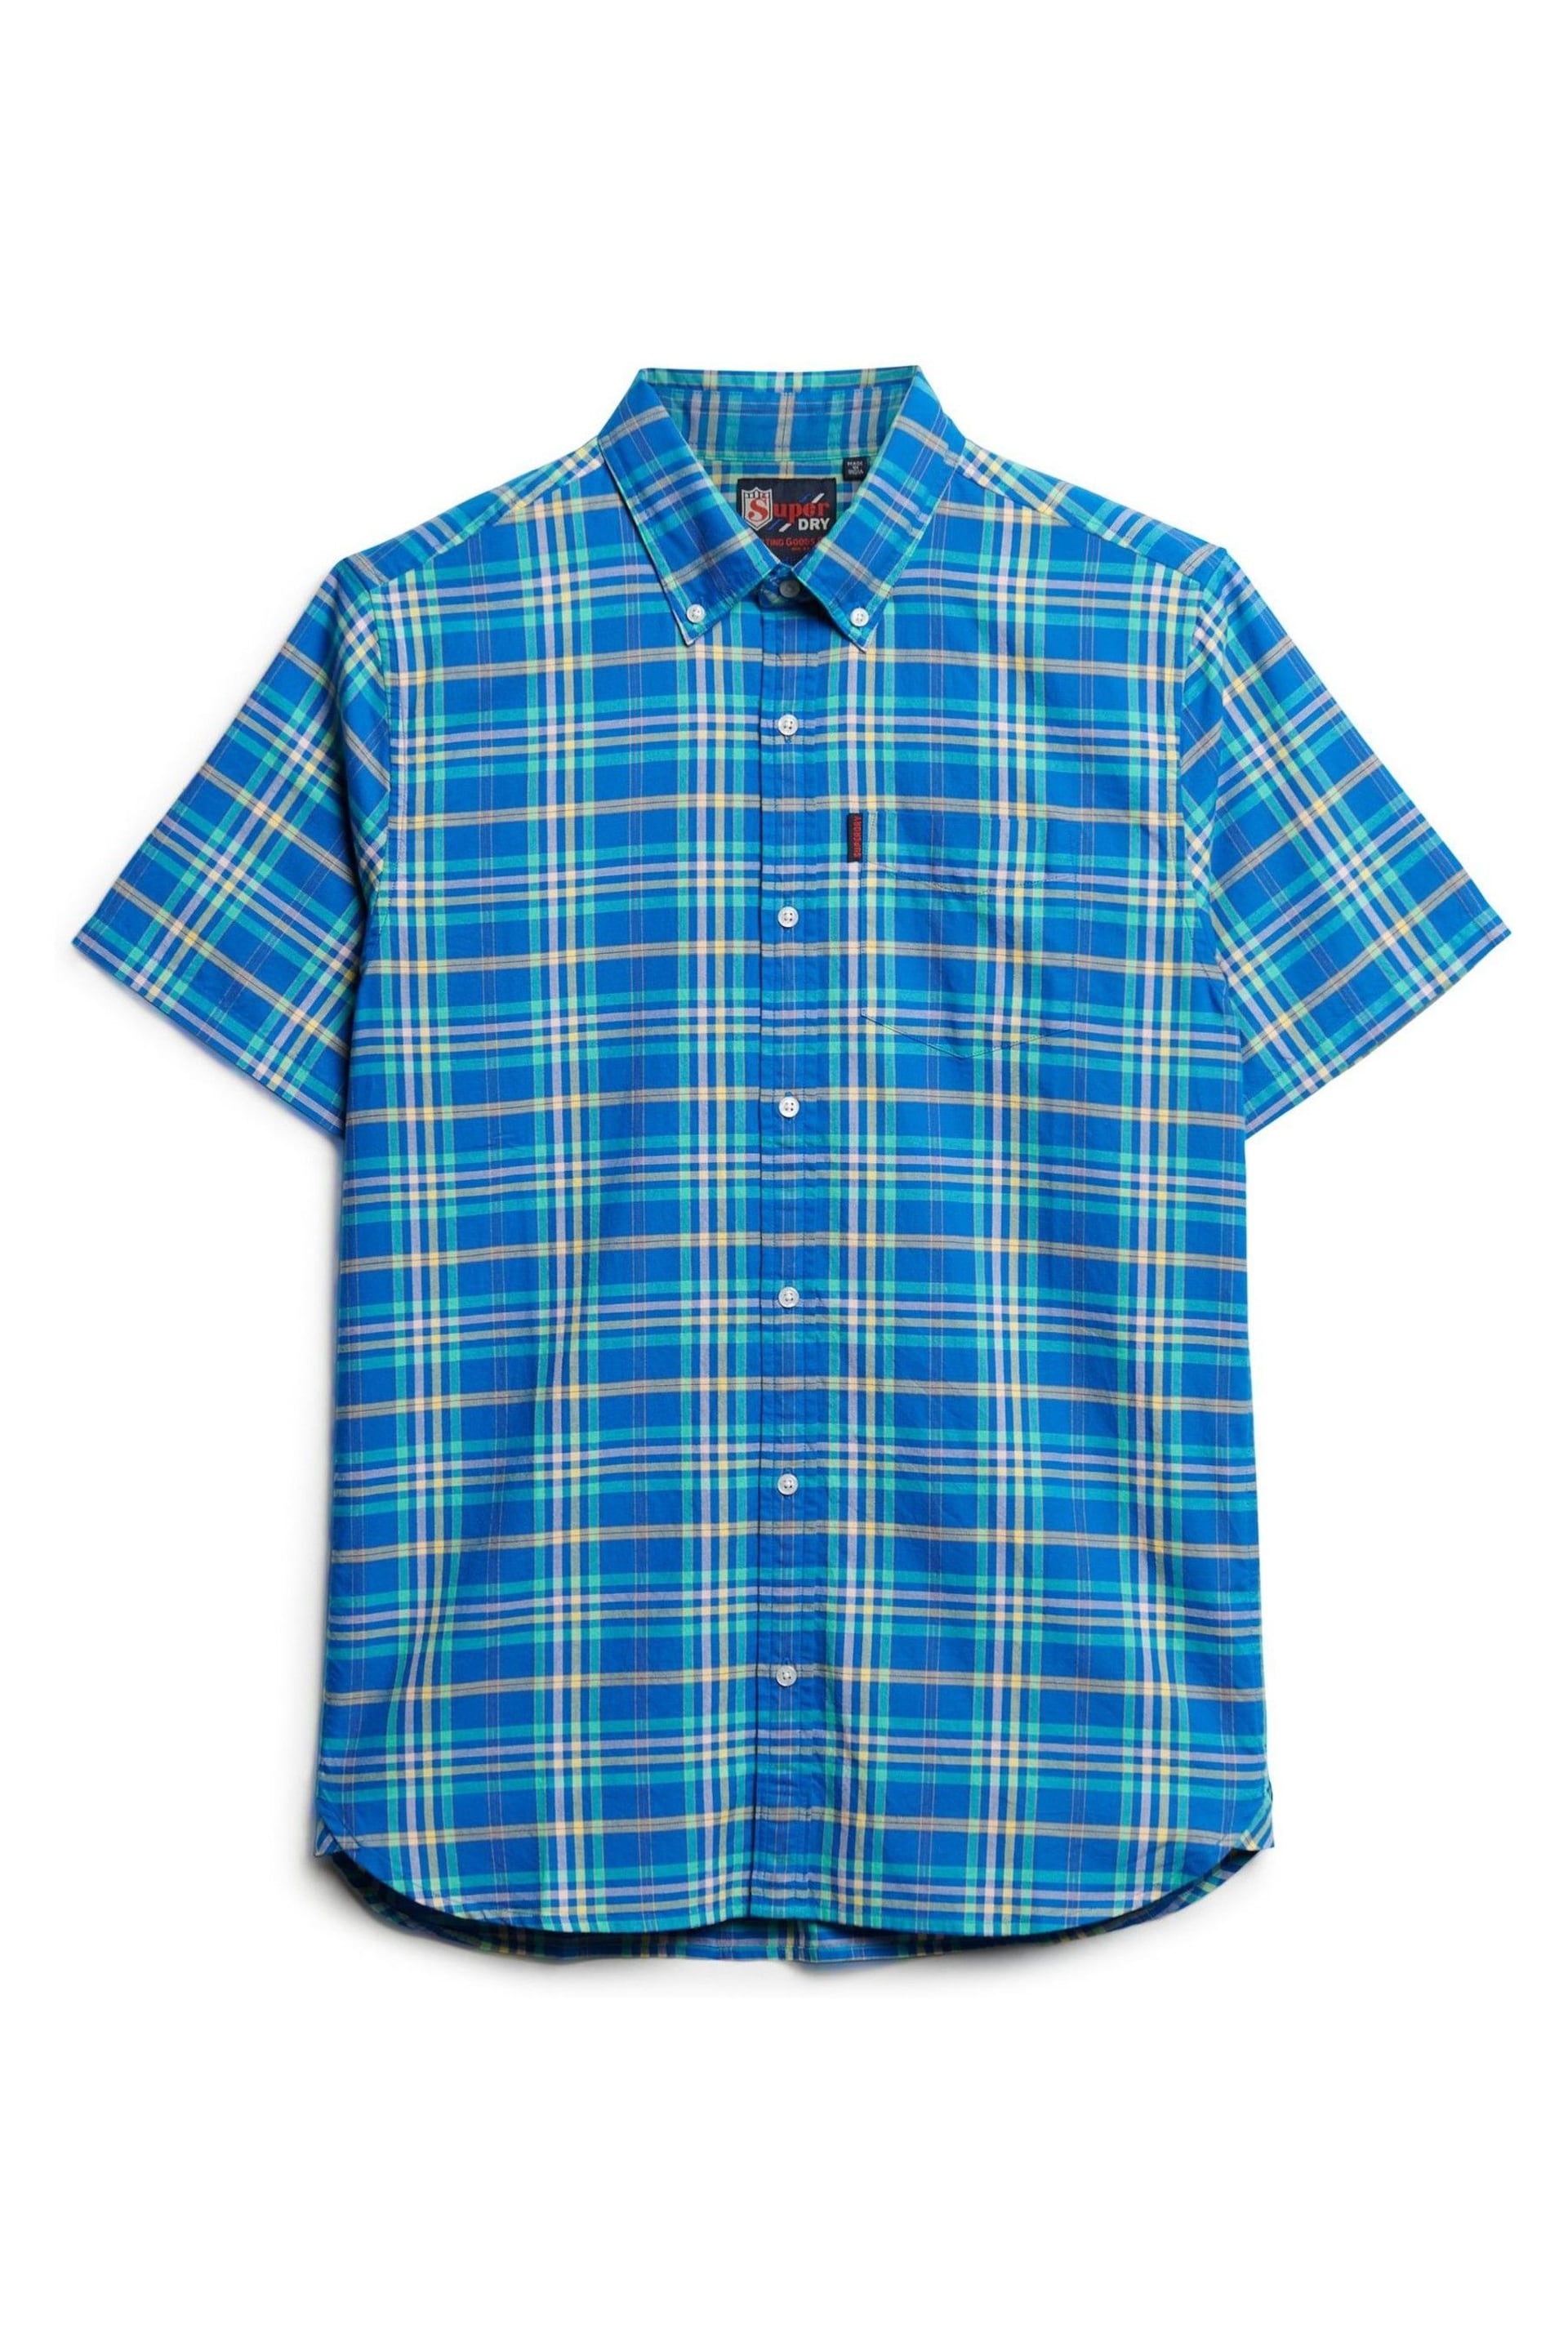 Superdry Blue Lightweight Check Shirt - Image 4 of 6